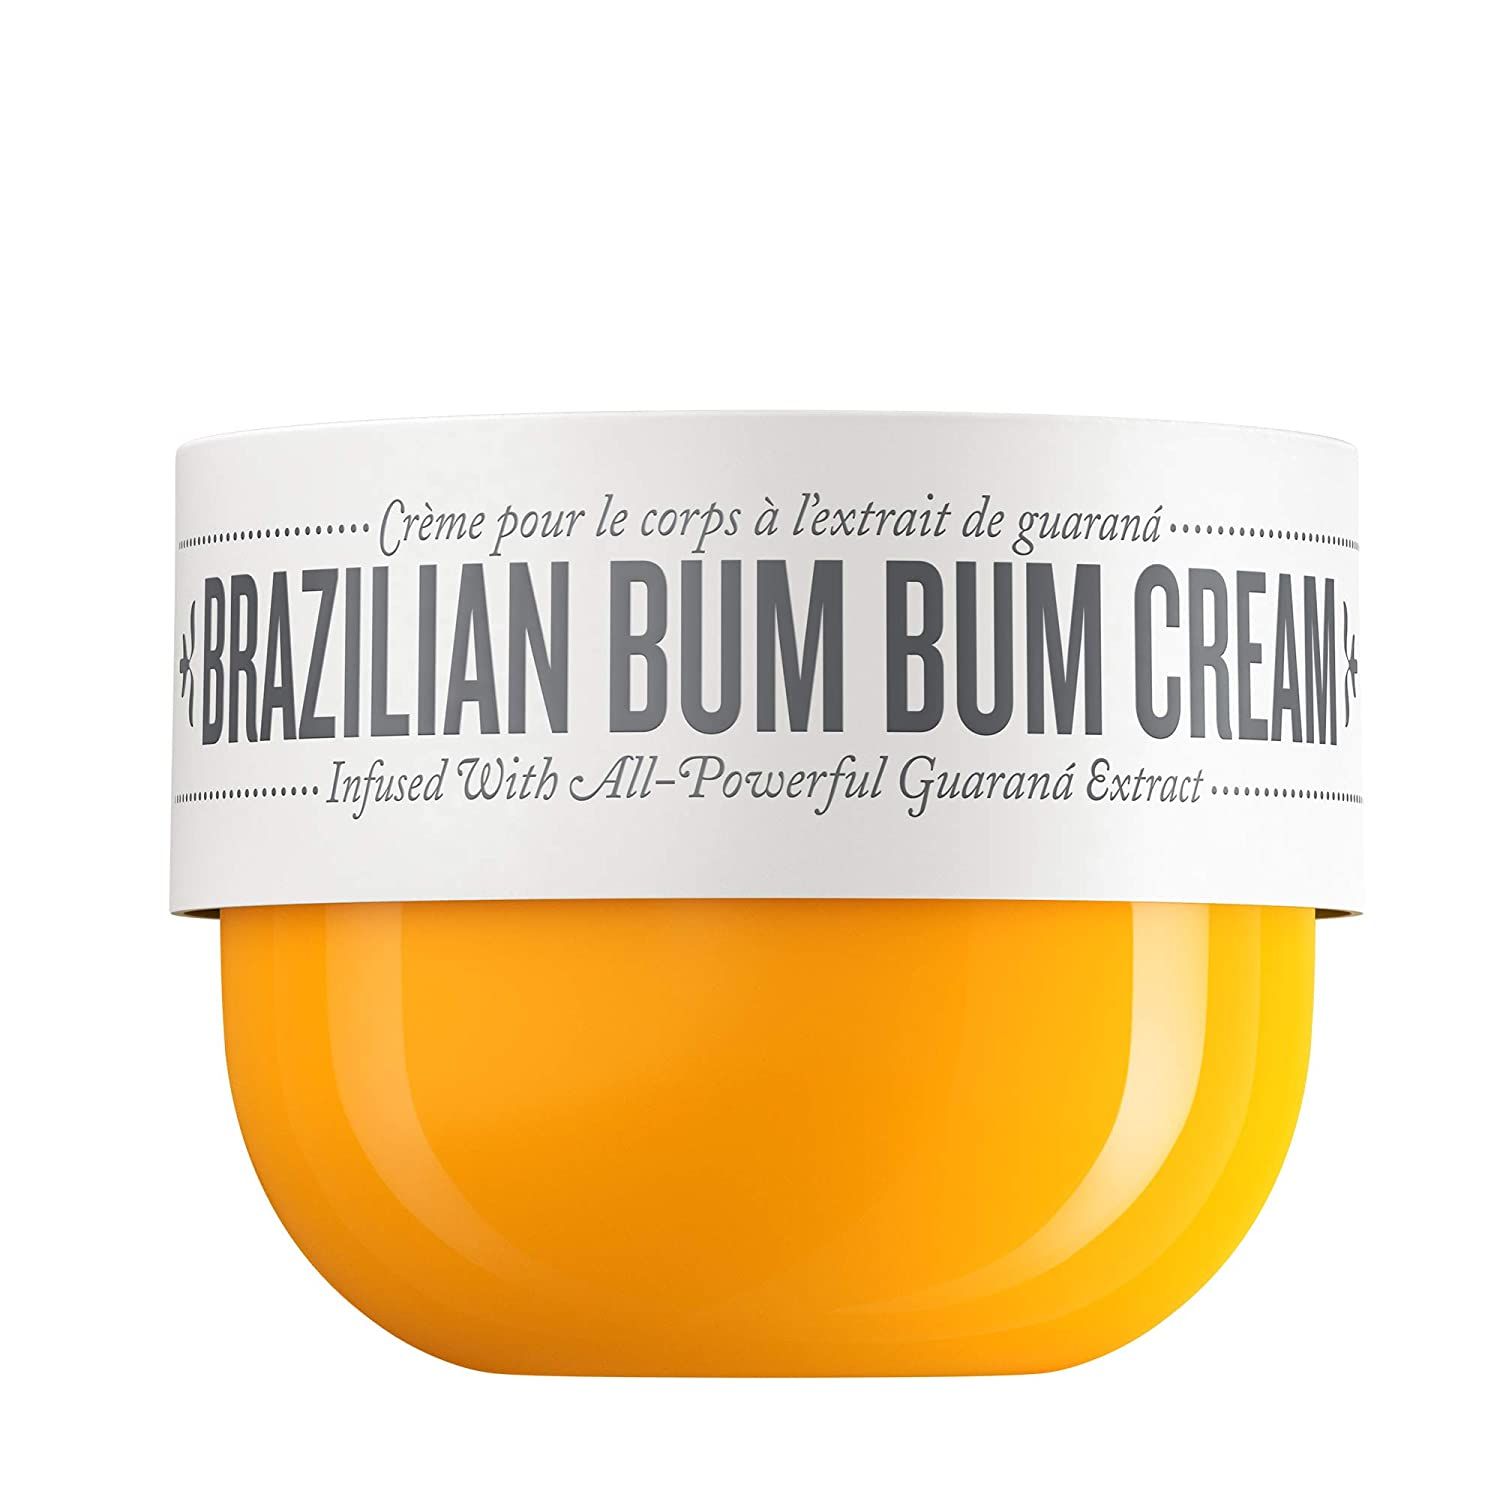 Sol de Janiero Cream Bum Bum Brazilach